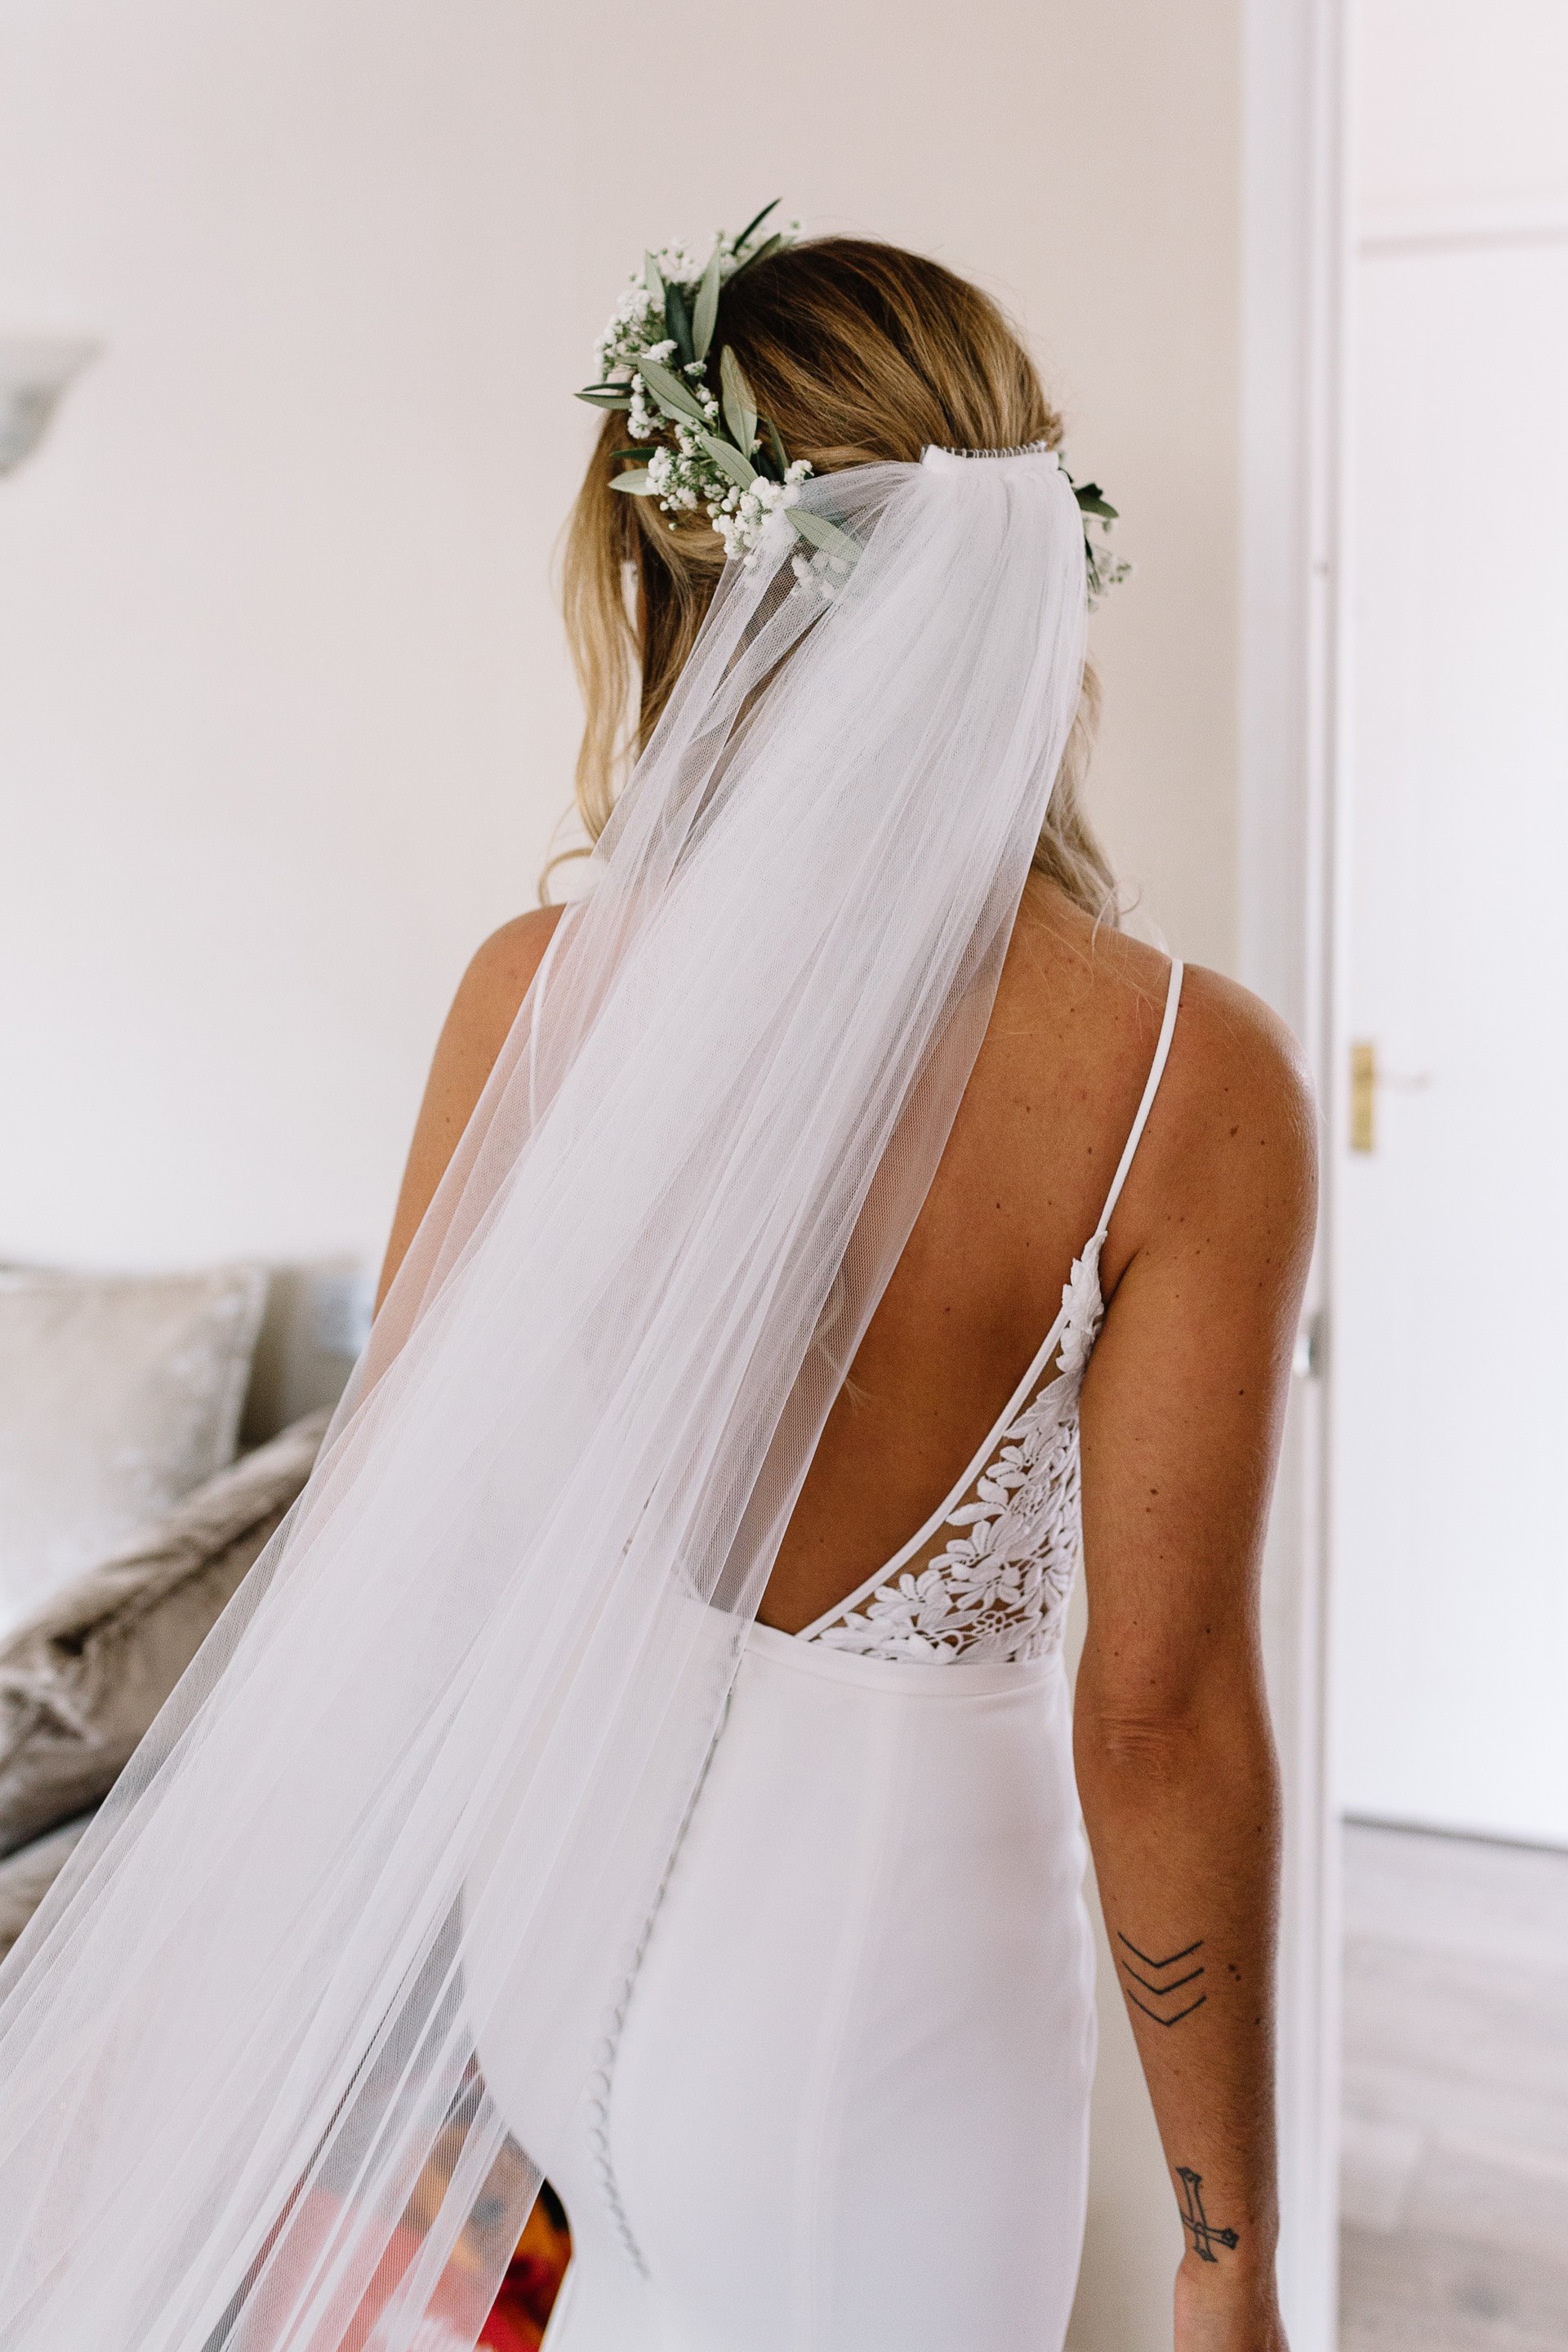 Long veil for a boho bride in 2021